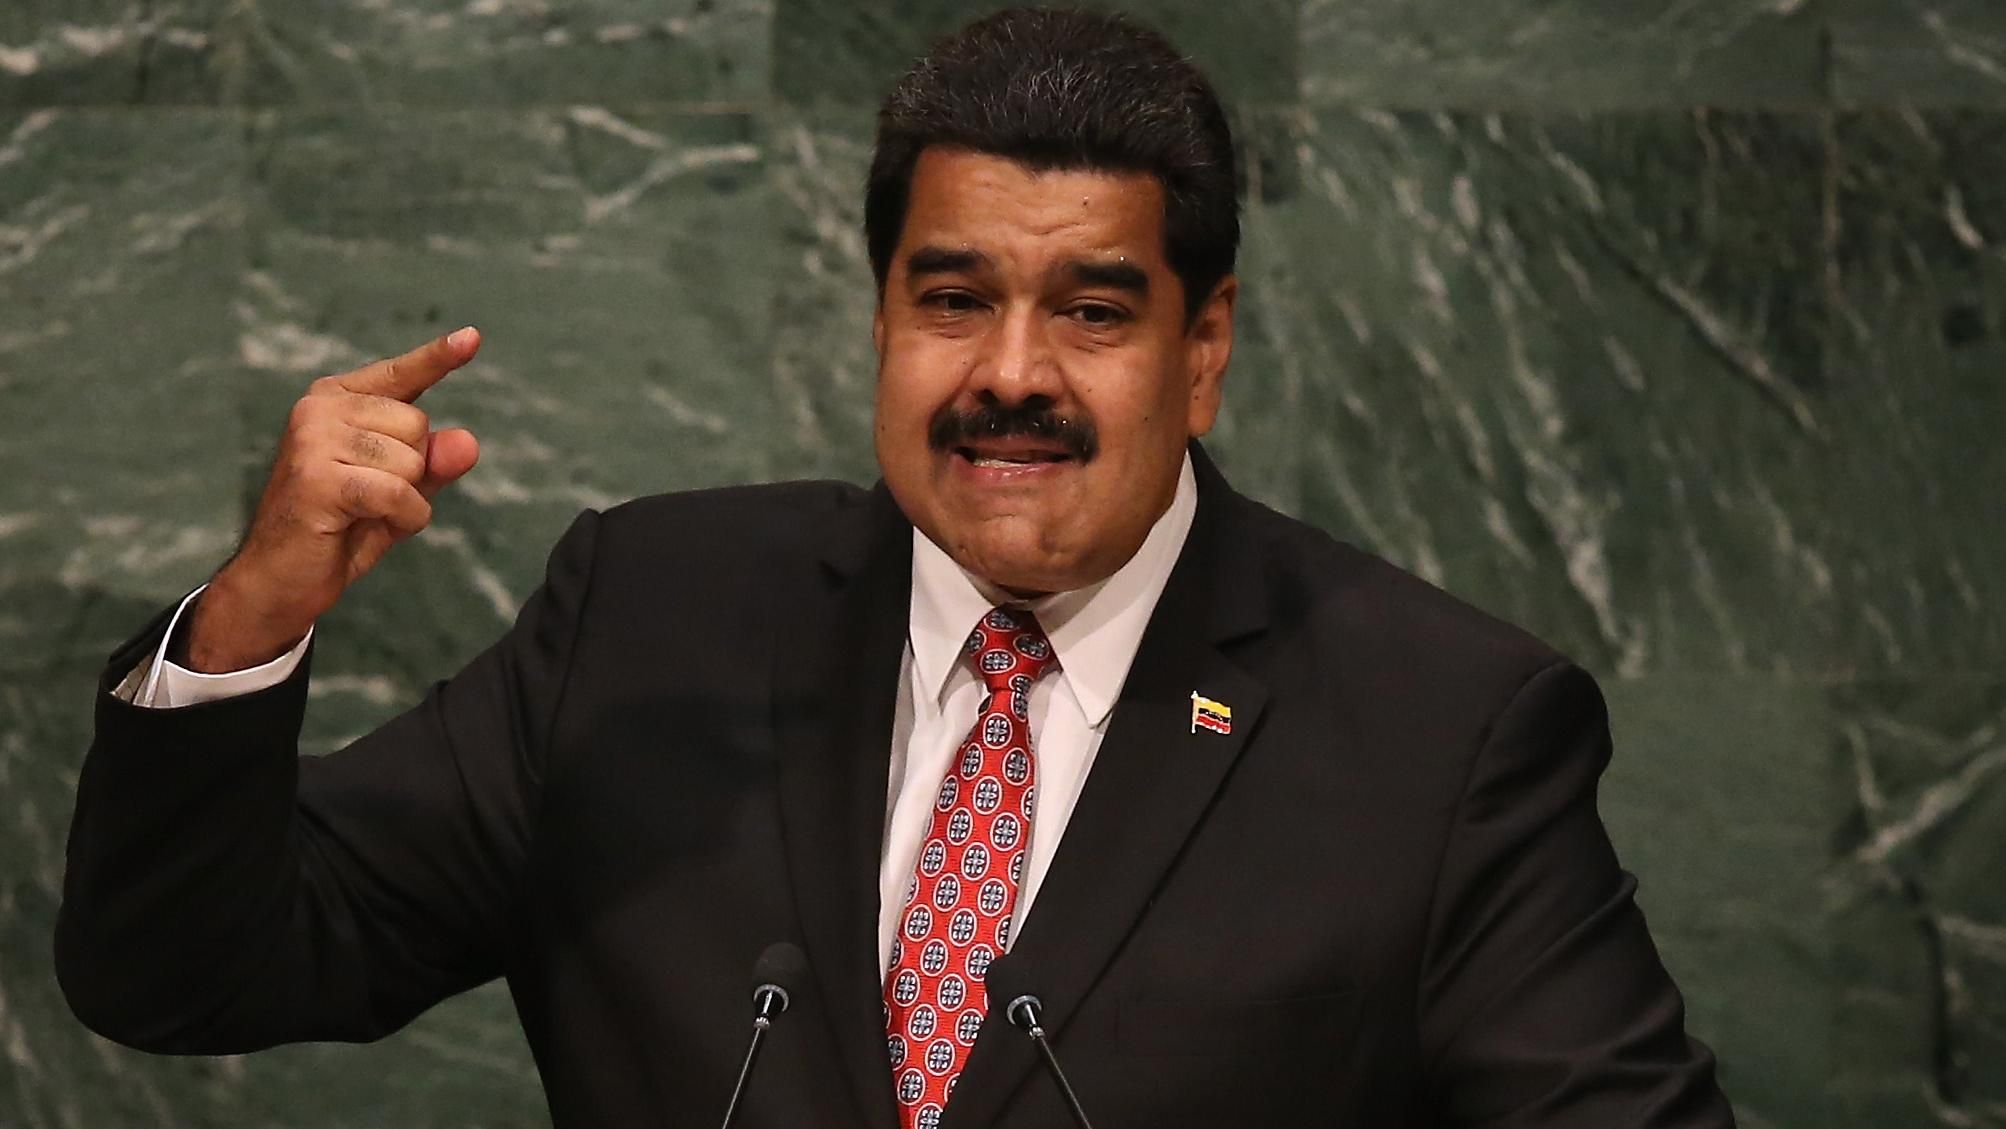 Мадуро заявил о подавлении госпереворота в Венесуэле